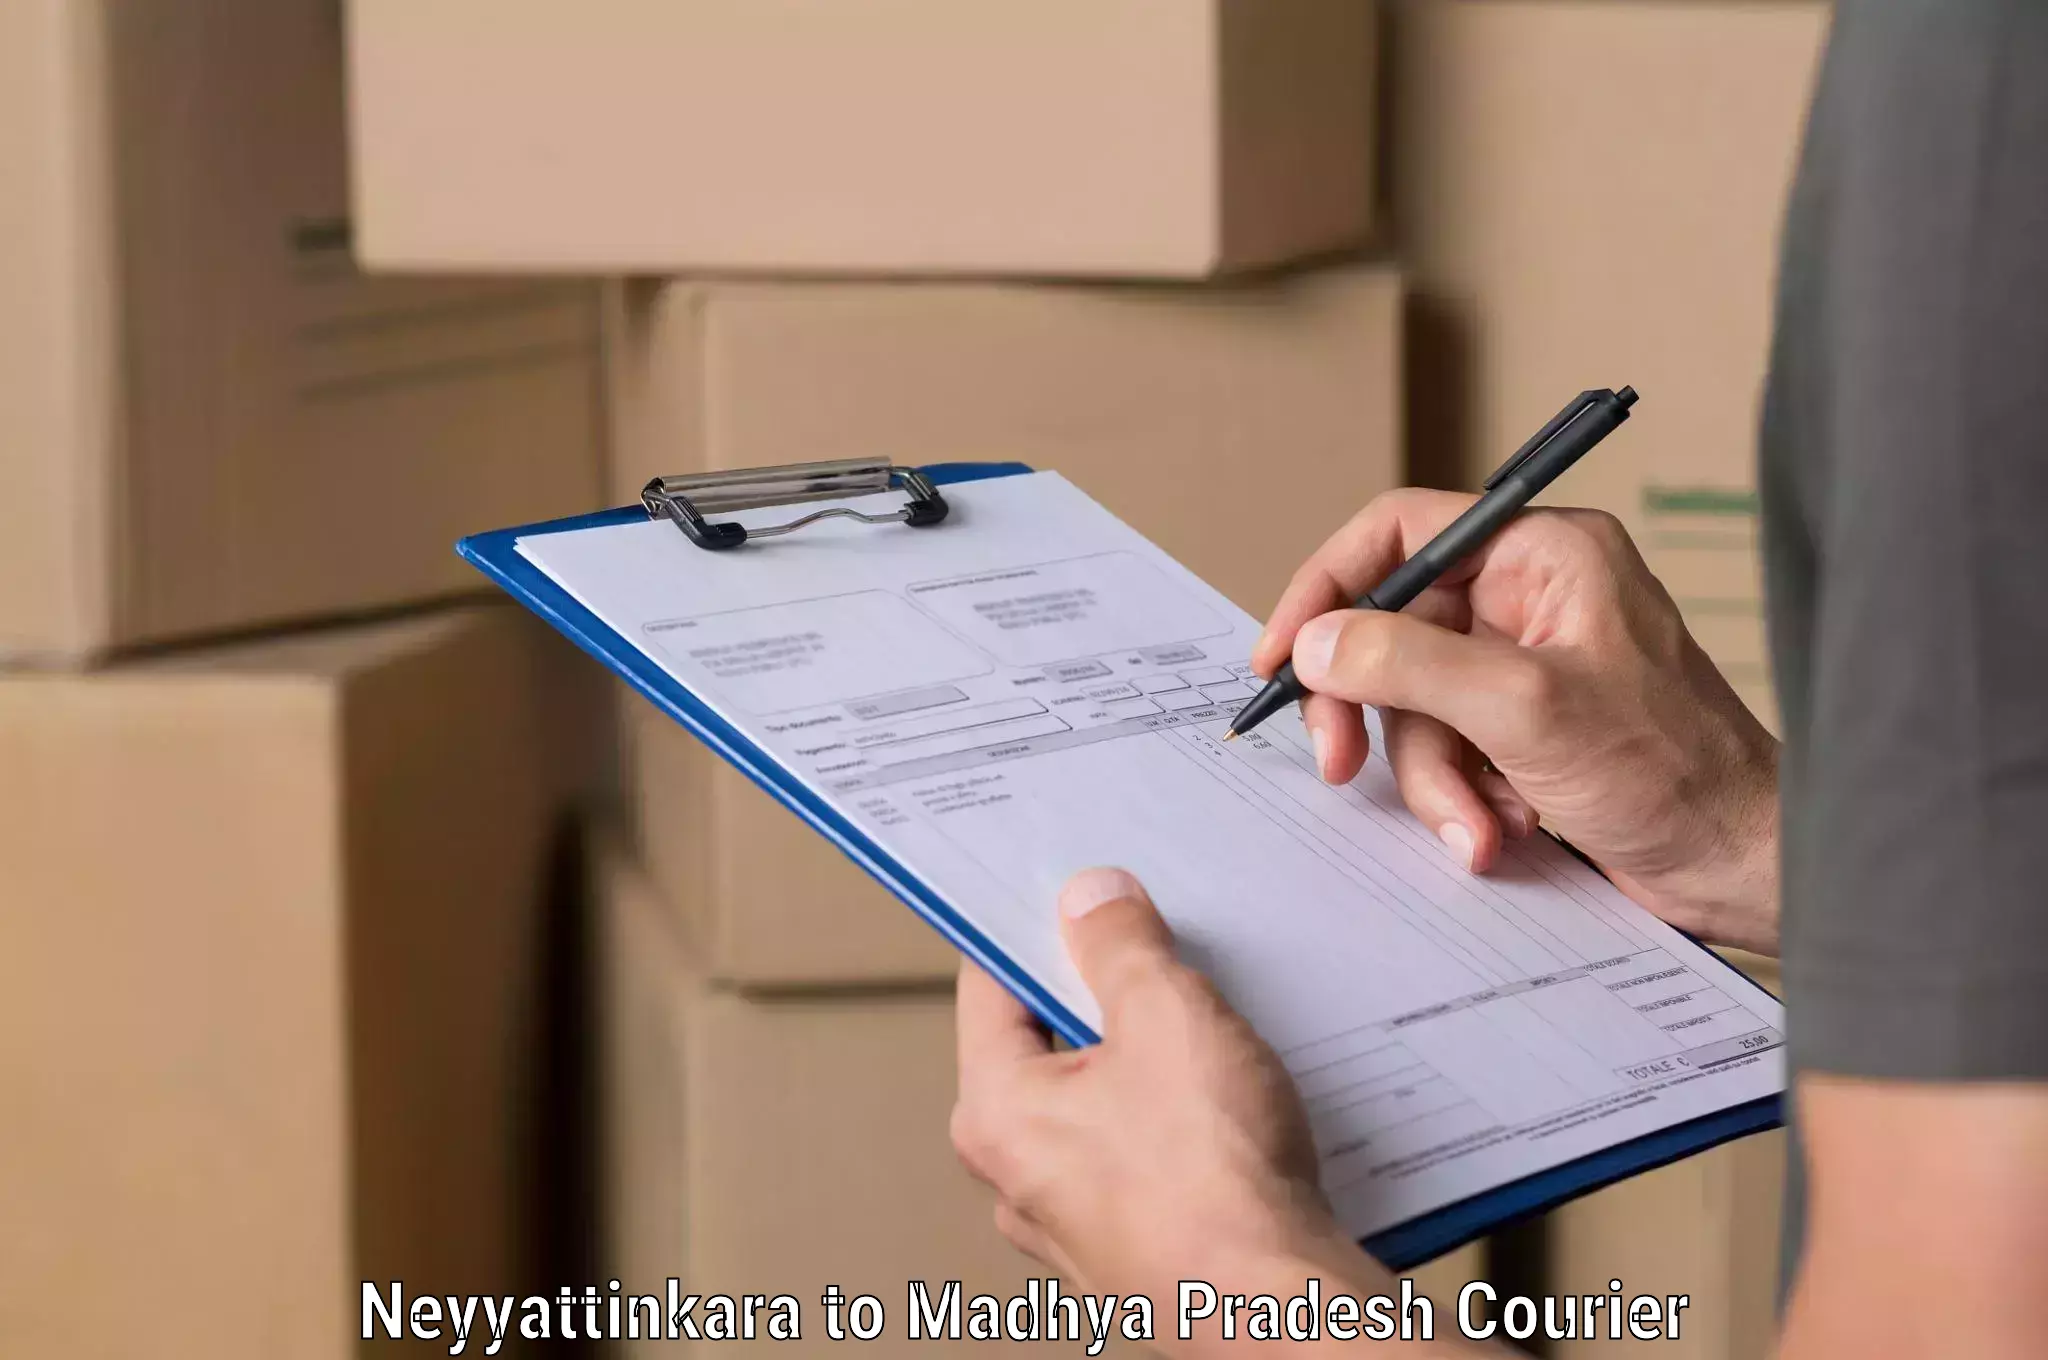 Global courier networks Neyyattinkara to Madhya Pradesh